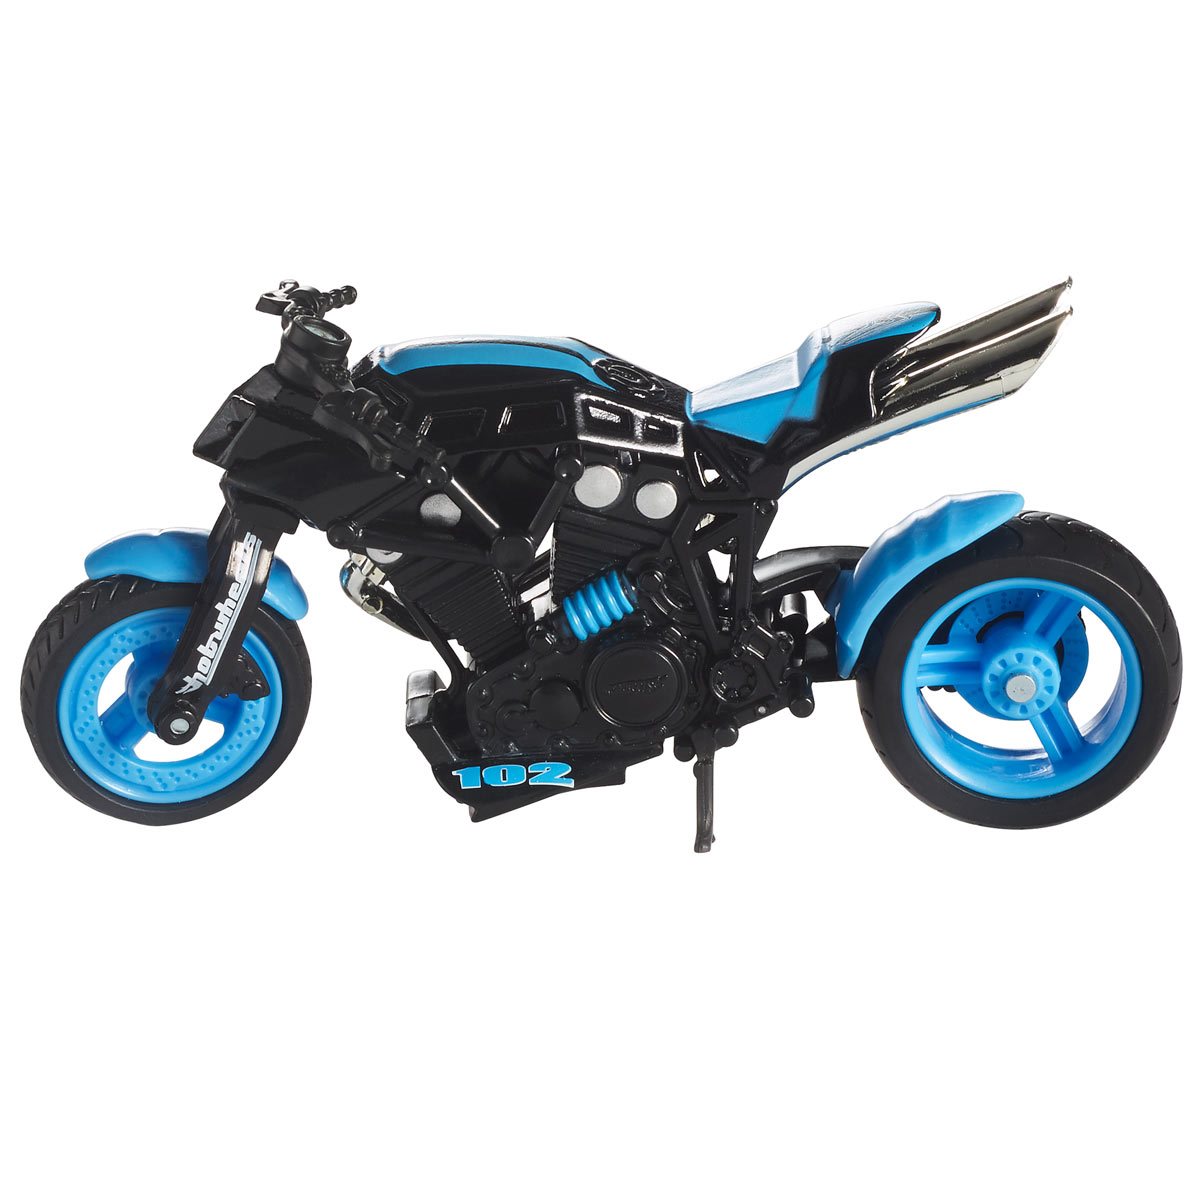 Spiderman Motorcycle  Sport bikes, Sports bikes motorcycles, Super bikes